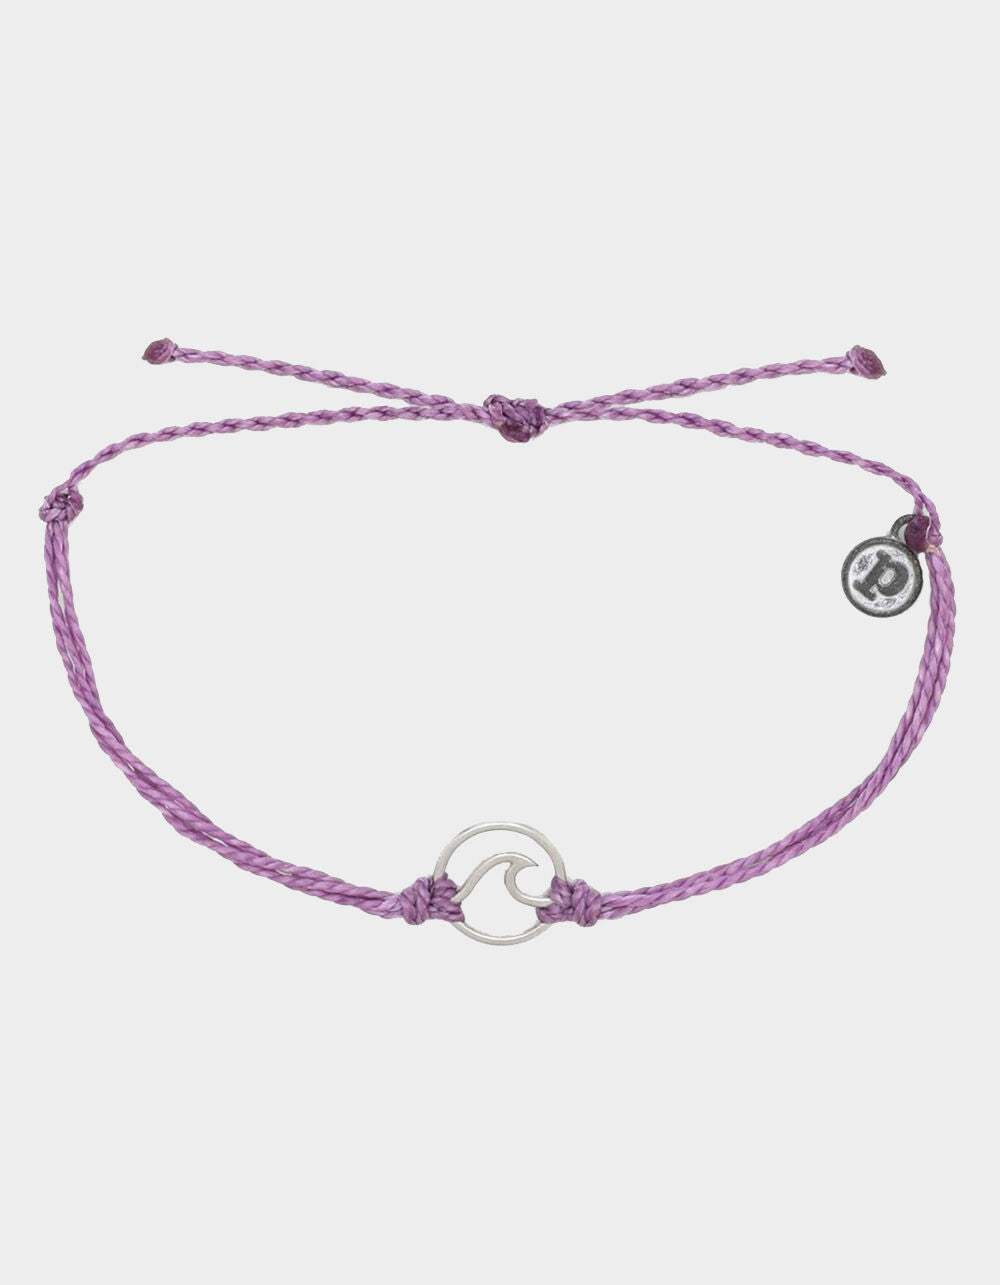 Puravida Silver Wave Charm Bracelet - Lavender - Mellow Monkey